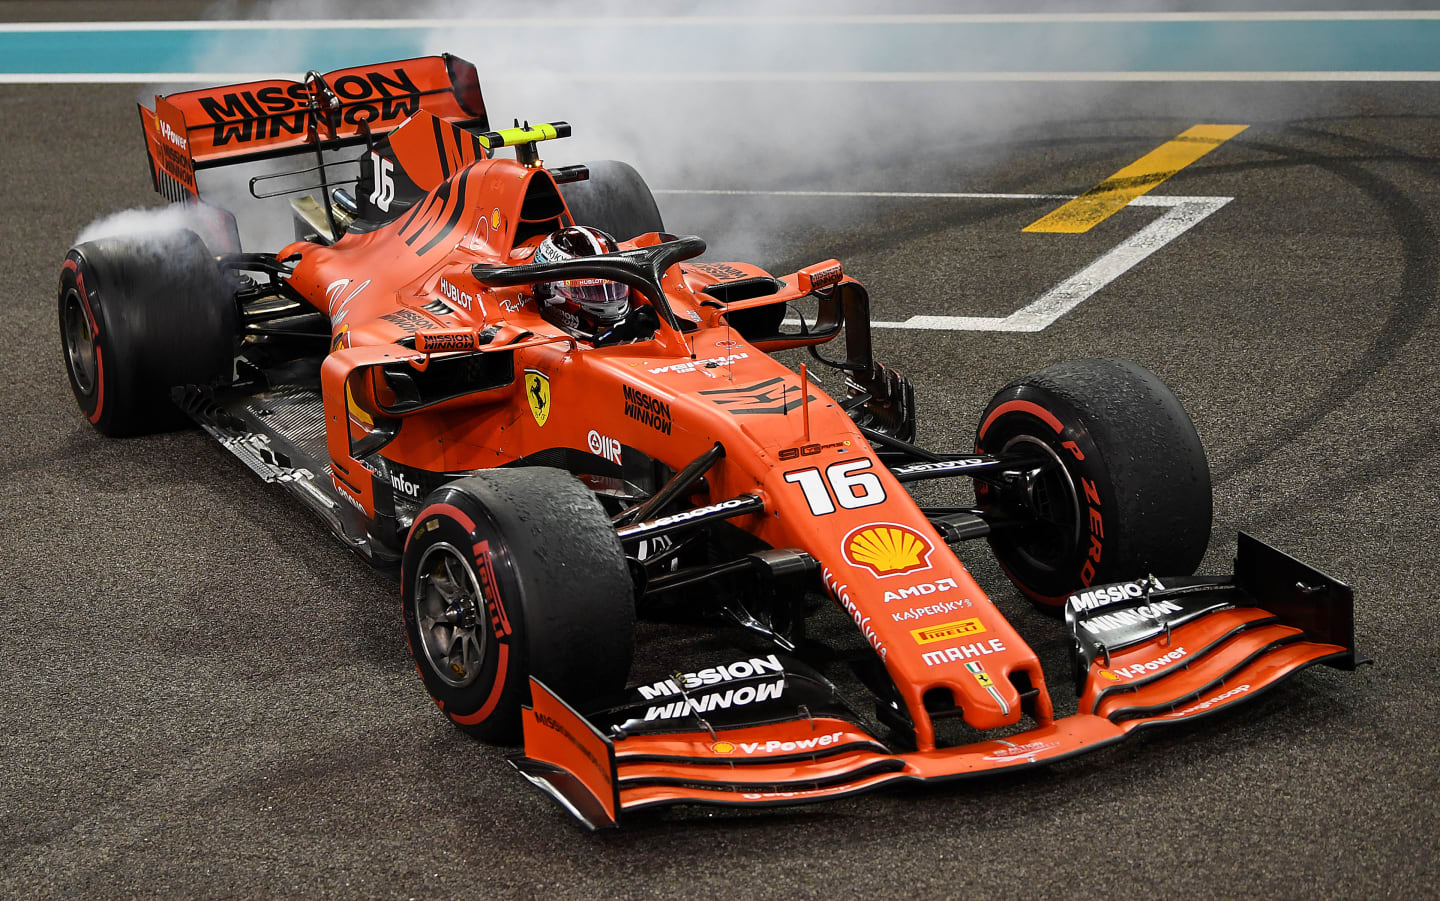 ABU DHABI, UNITED ARAB EMIRATES - DECEMBER 01: Third placed Charles Leclerc of Monaco driving the